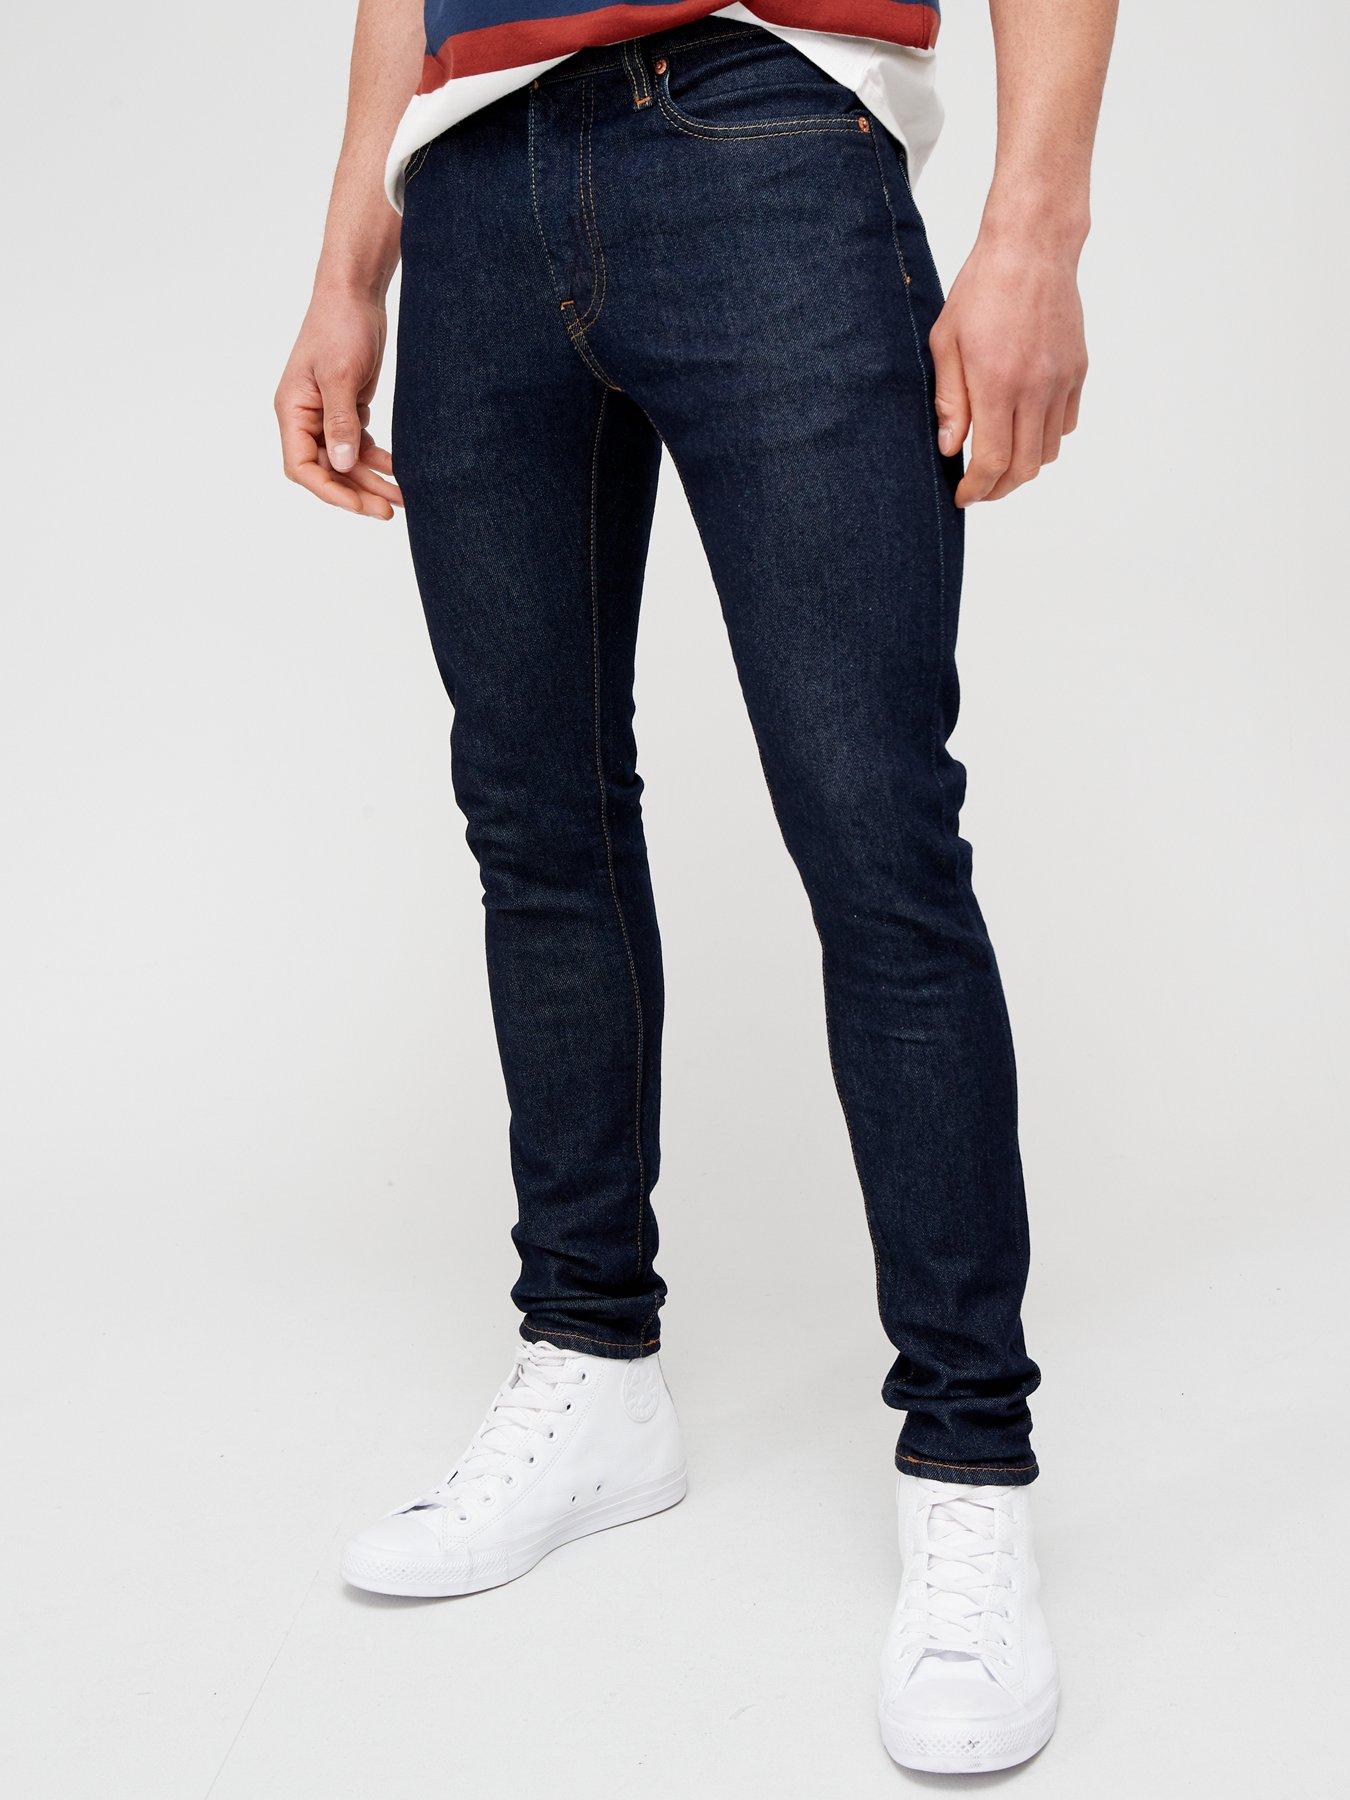 Levi's Skinny Taper Fit Jeans - Indigo 